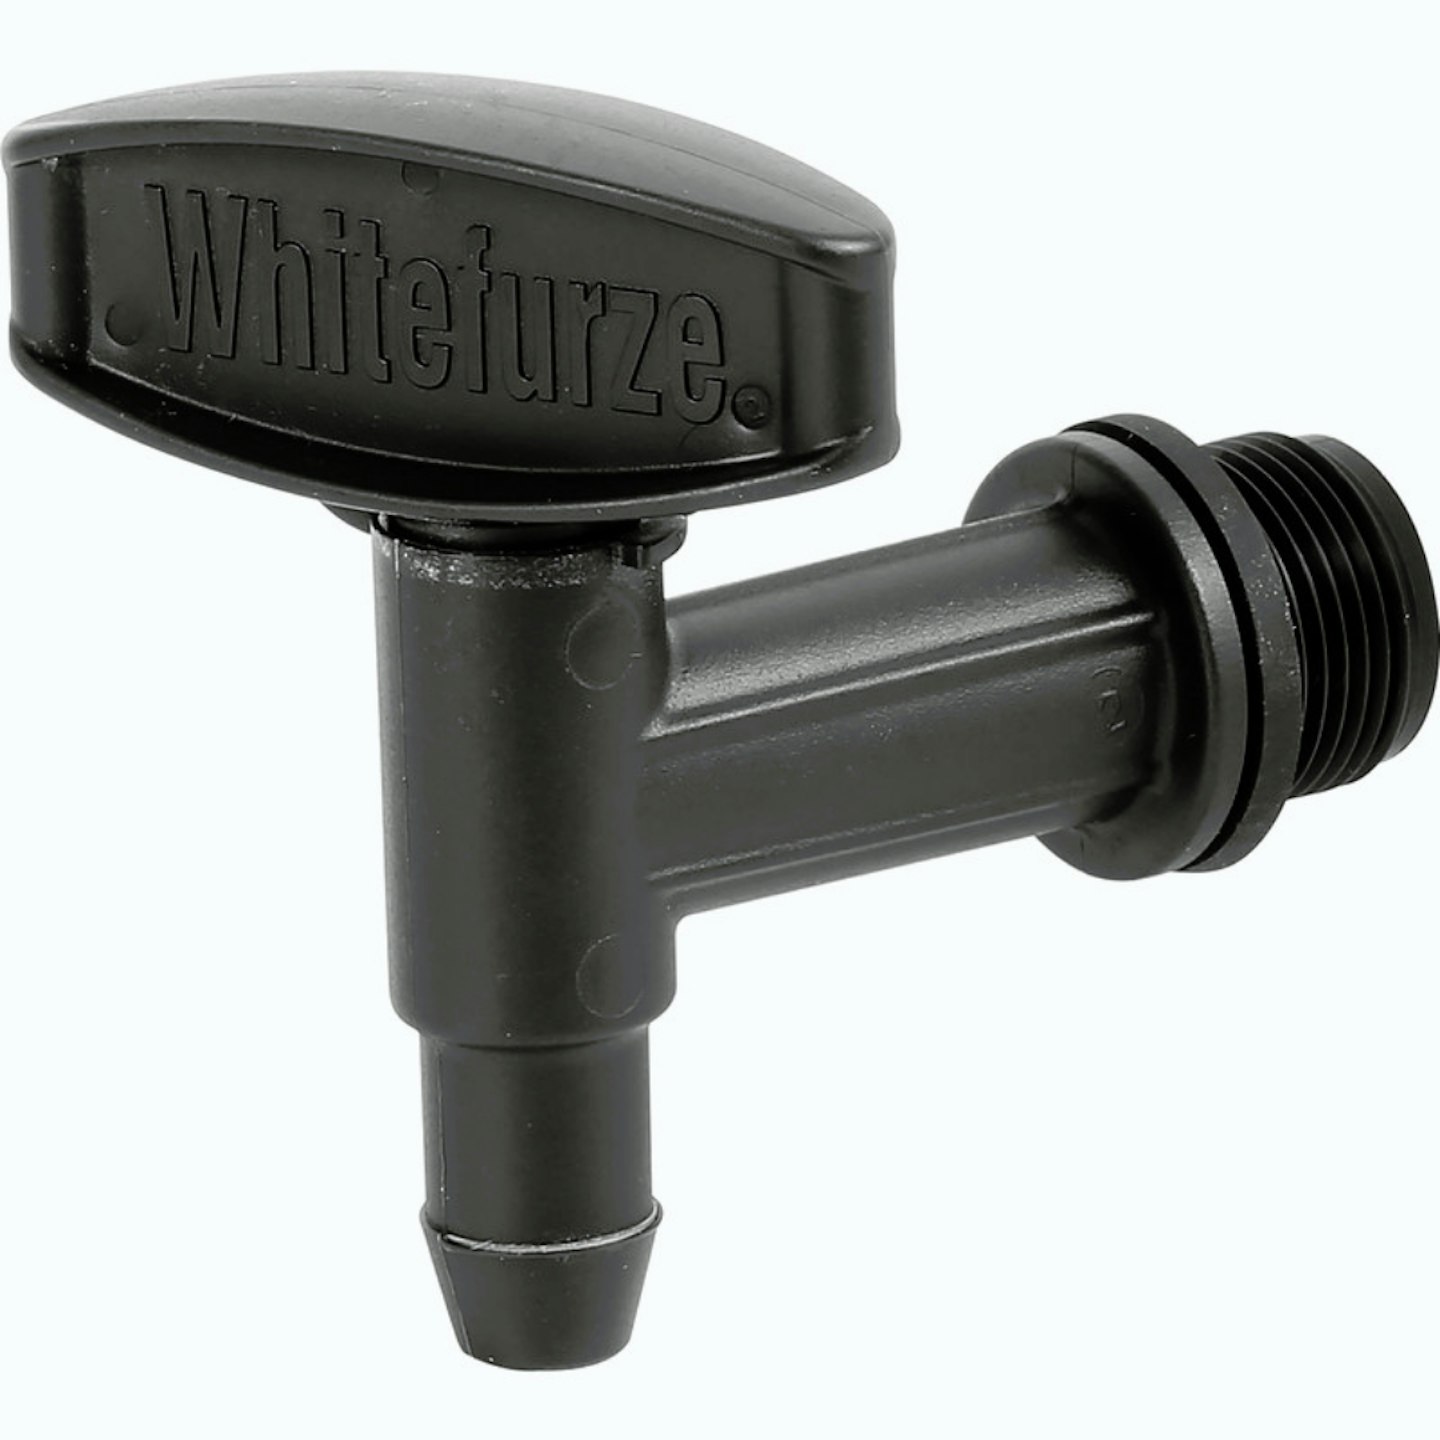 Whitefurze Water Butt Tap